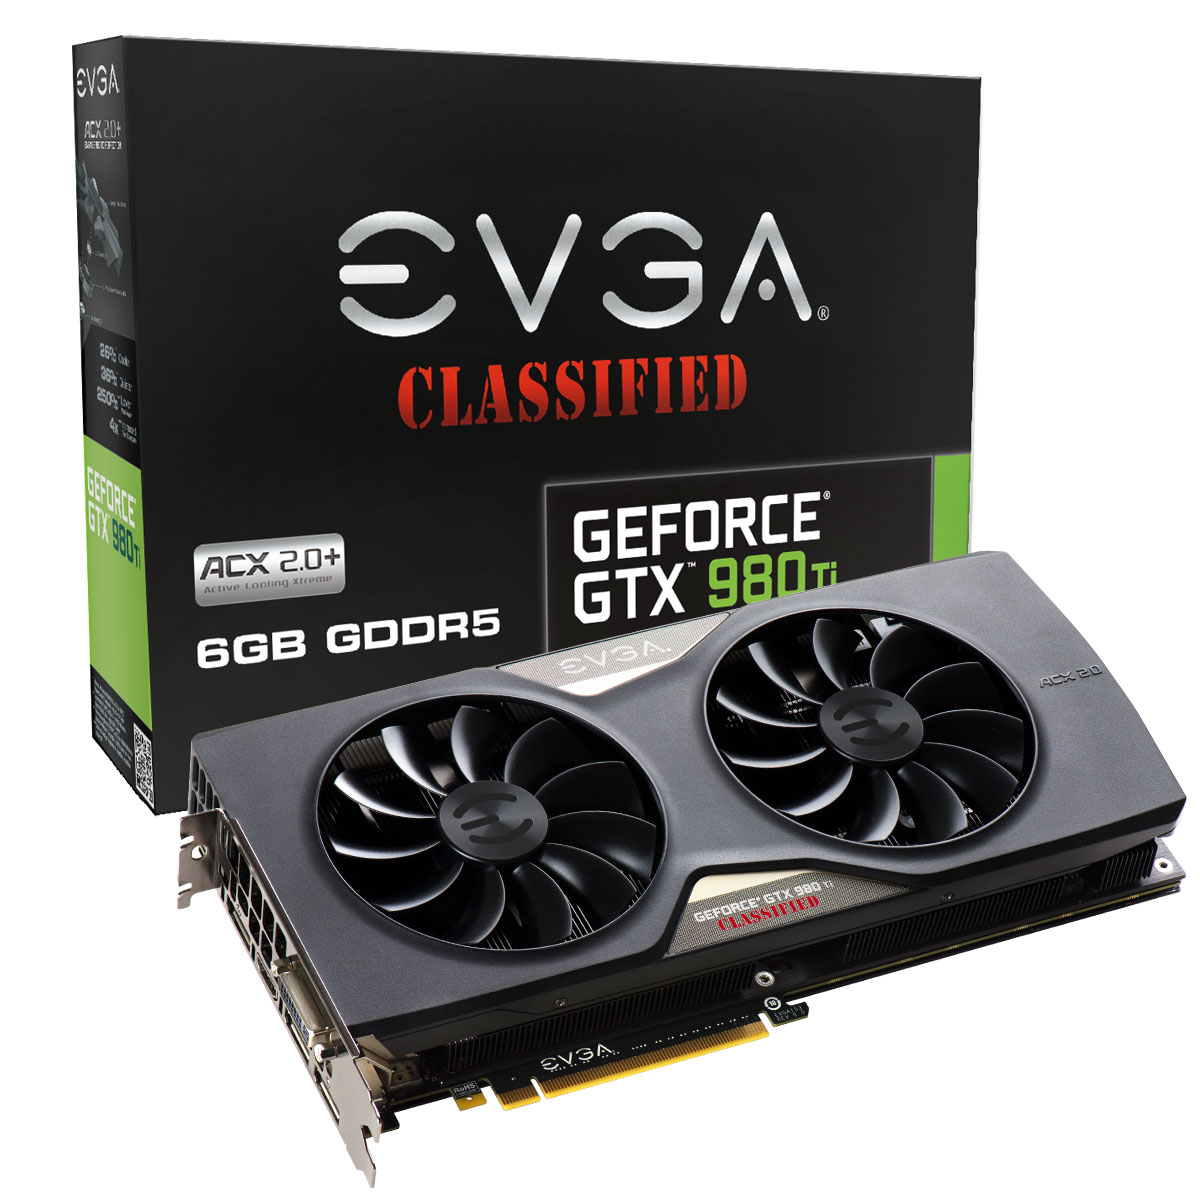 EVGA GeForce GTX 980 Ti Classified ACX 2.0+ announced 29